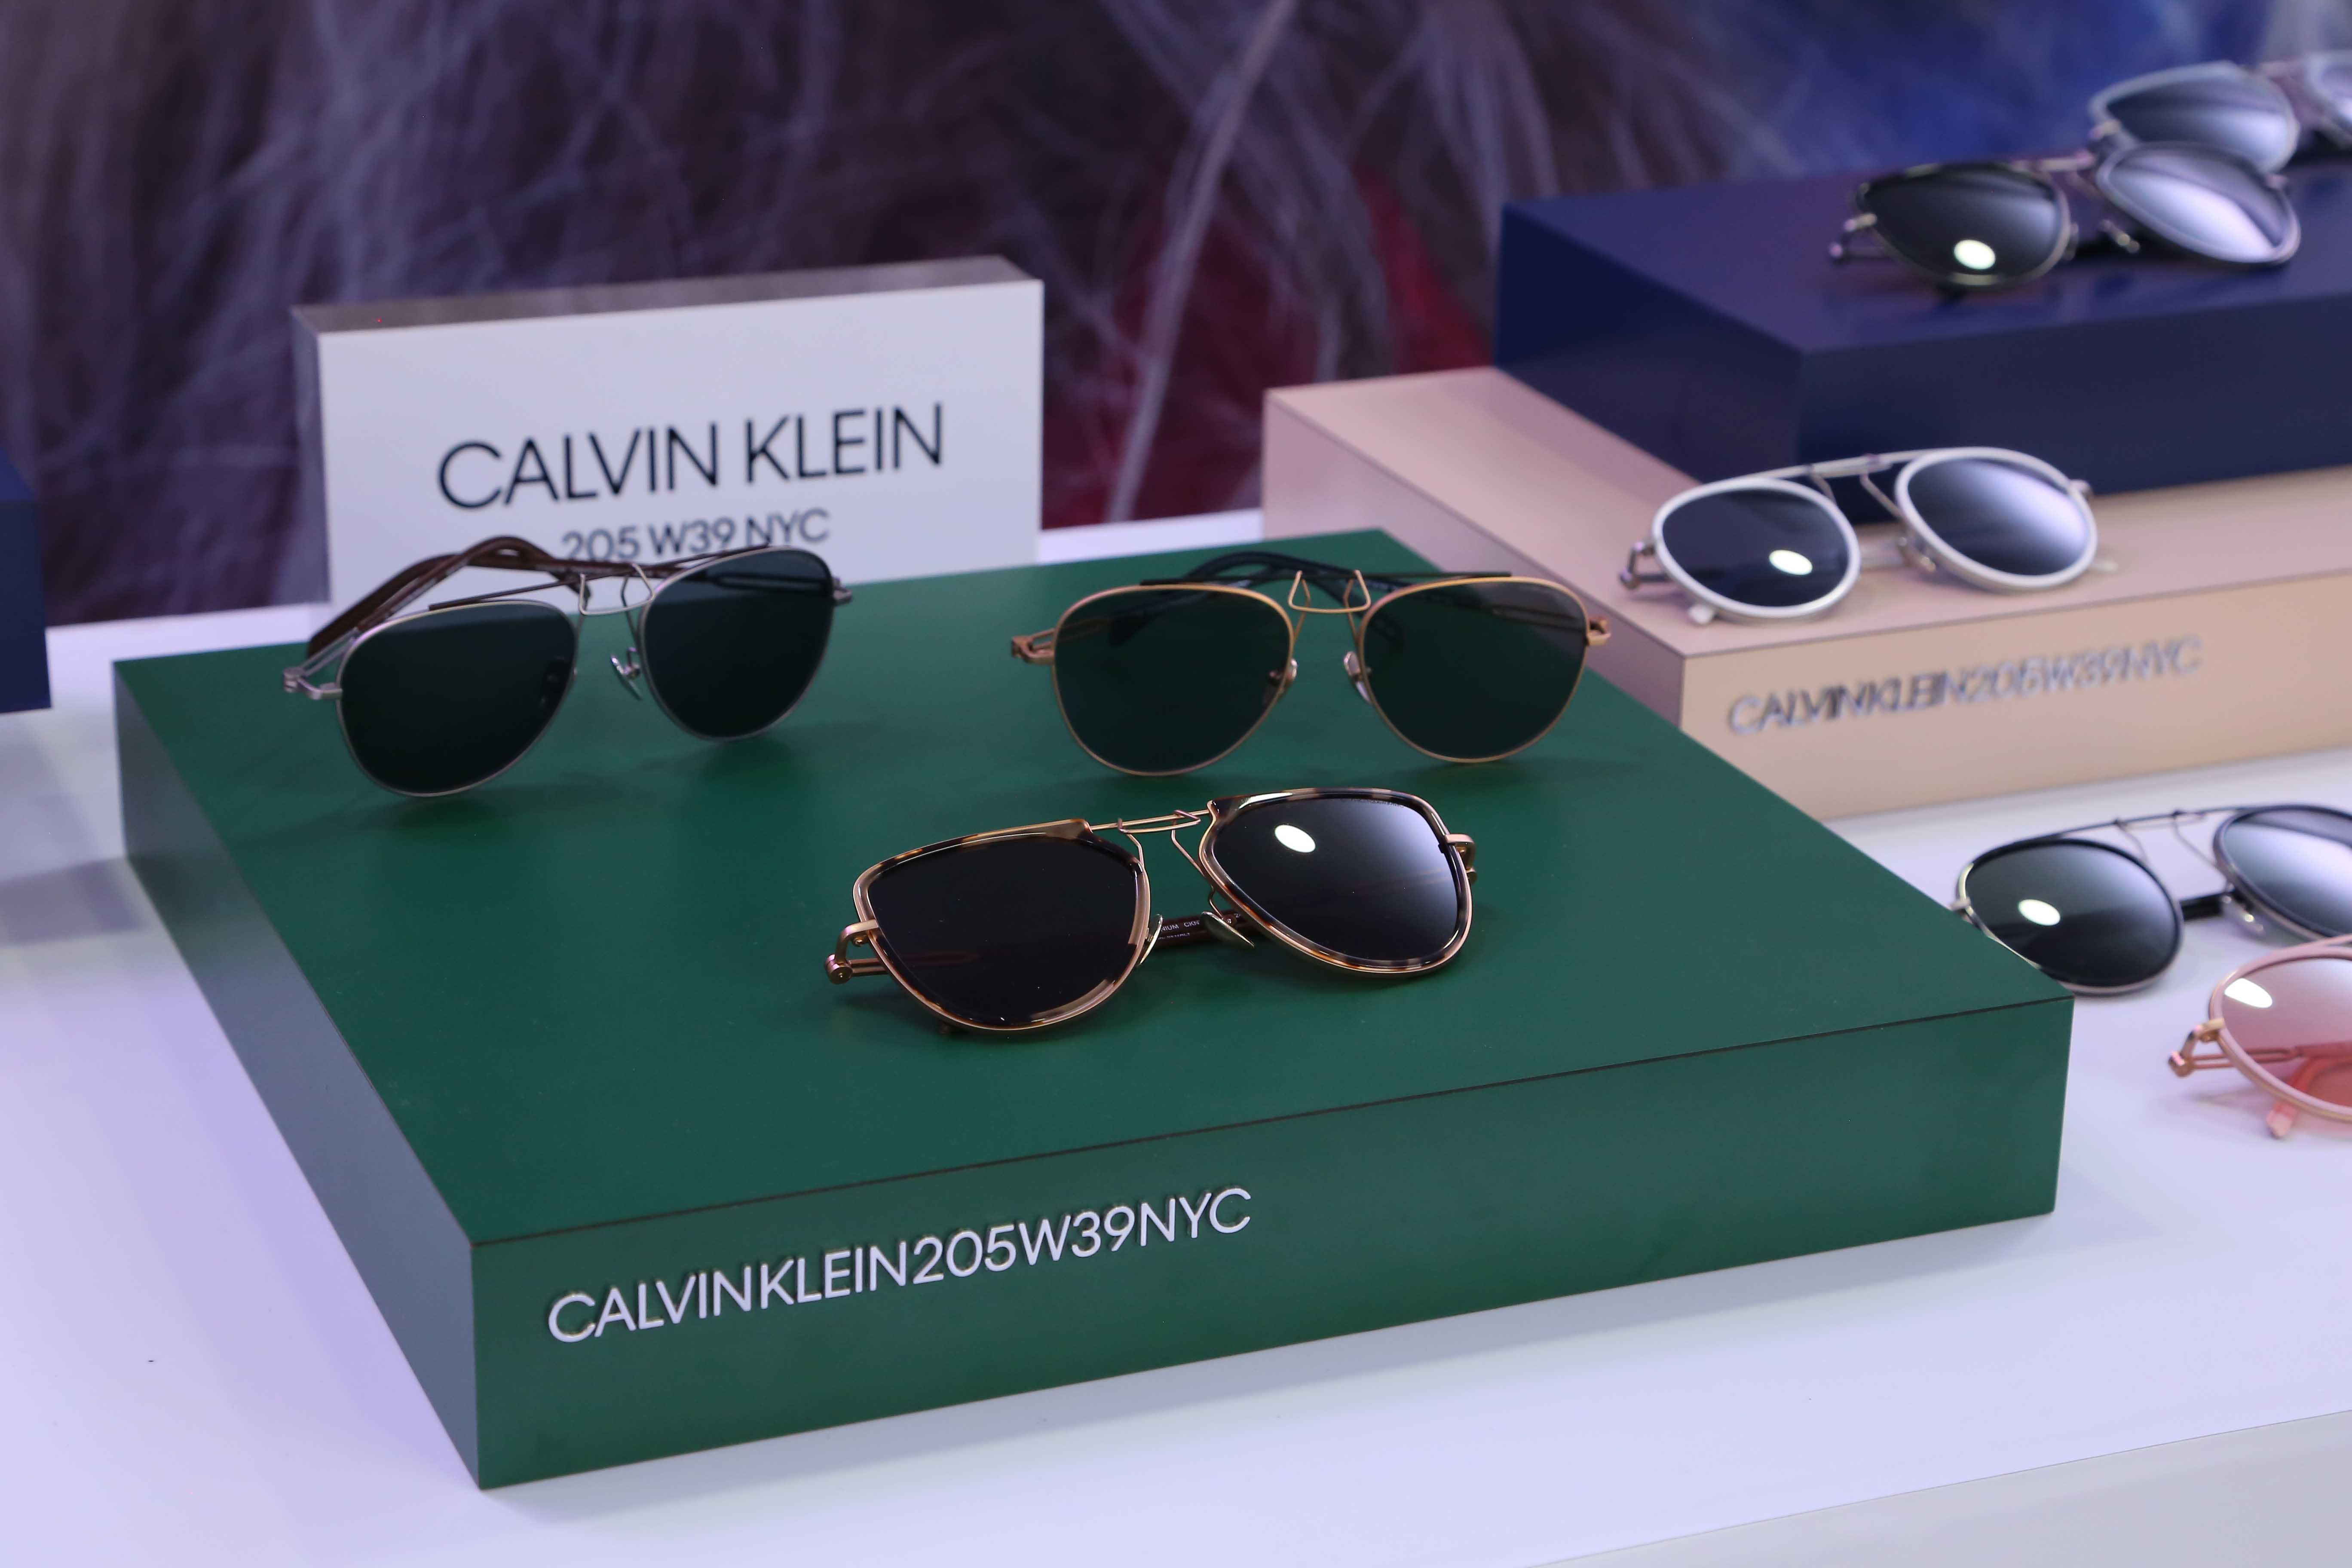 Favorit Para Artis! Ini Dia Koleksi Kacamata Calvin Klein 205W39NYC